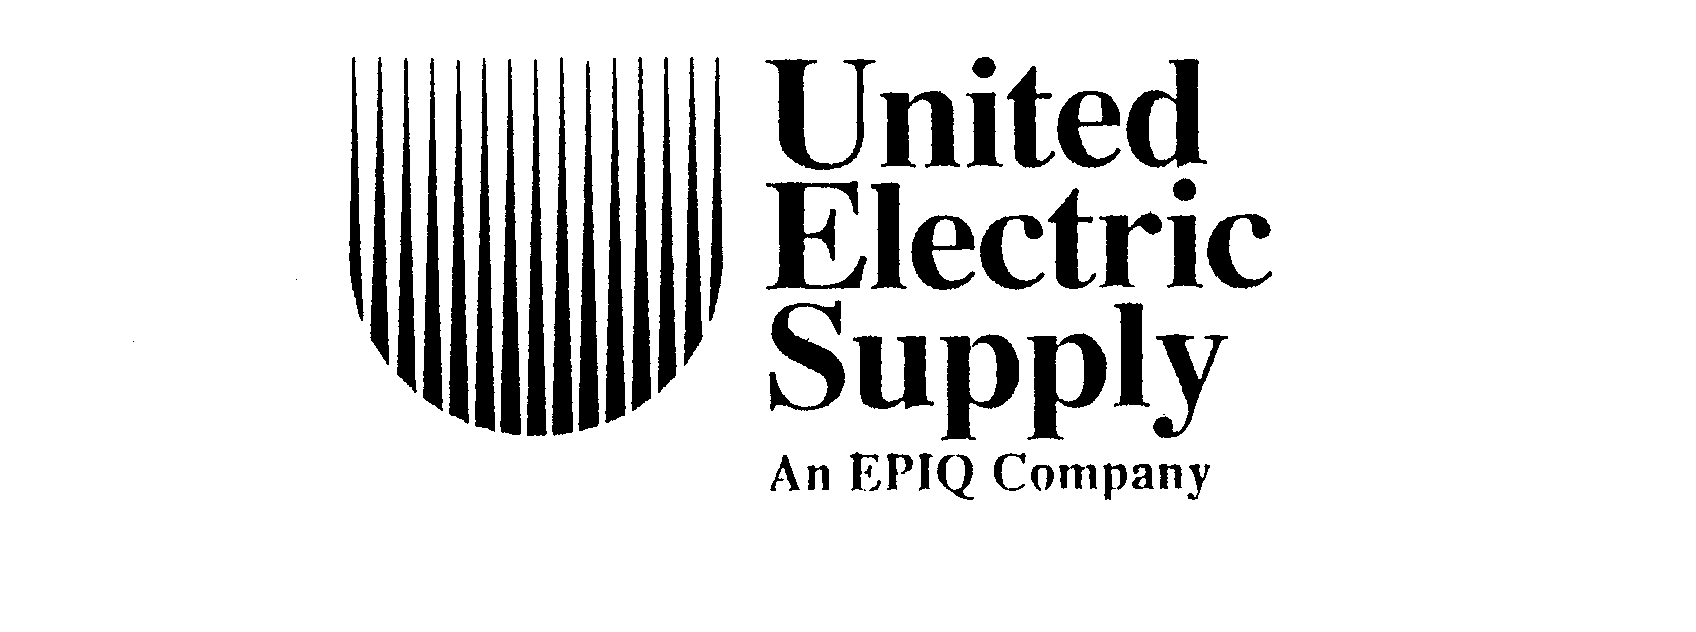  UNITED ELECTRIC SUPPLY AN EPIQ COMPANY